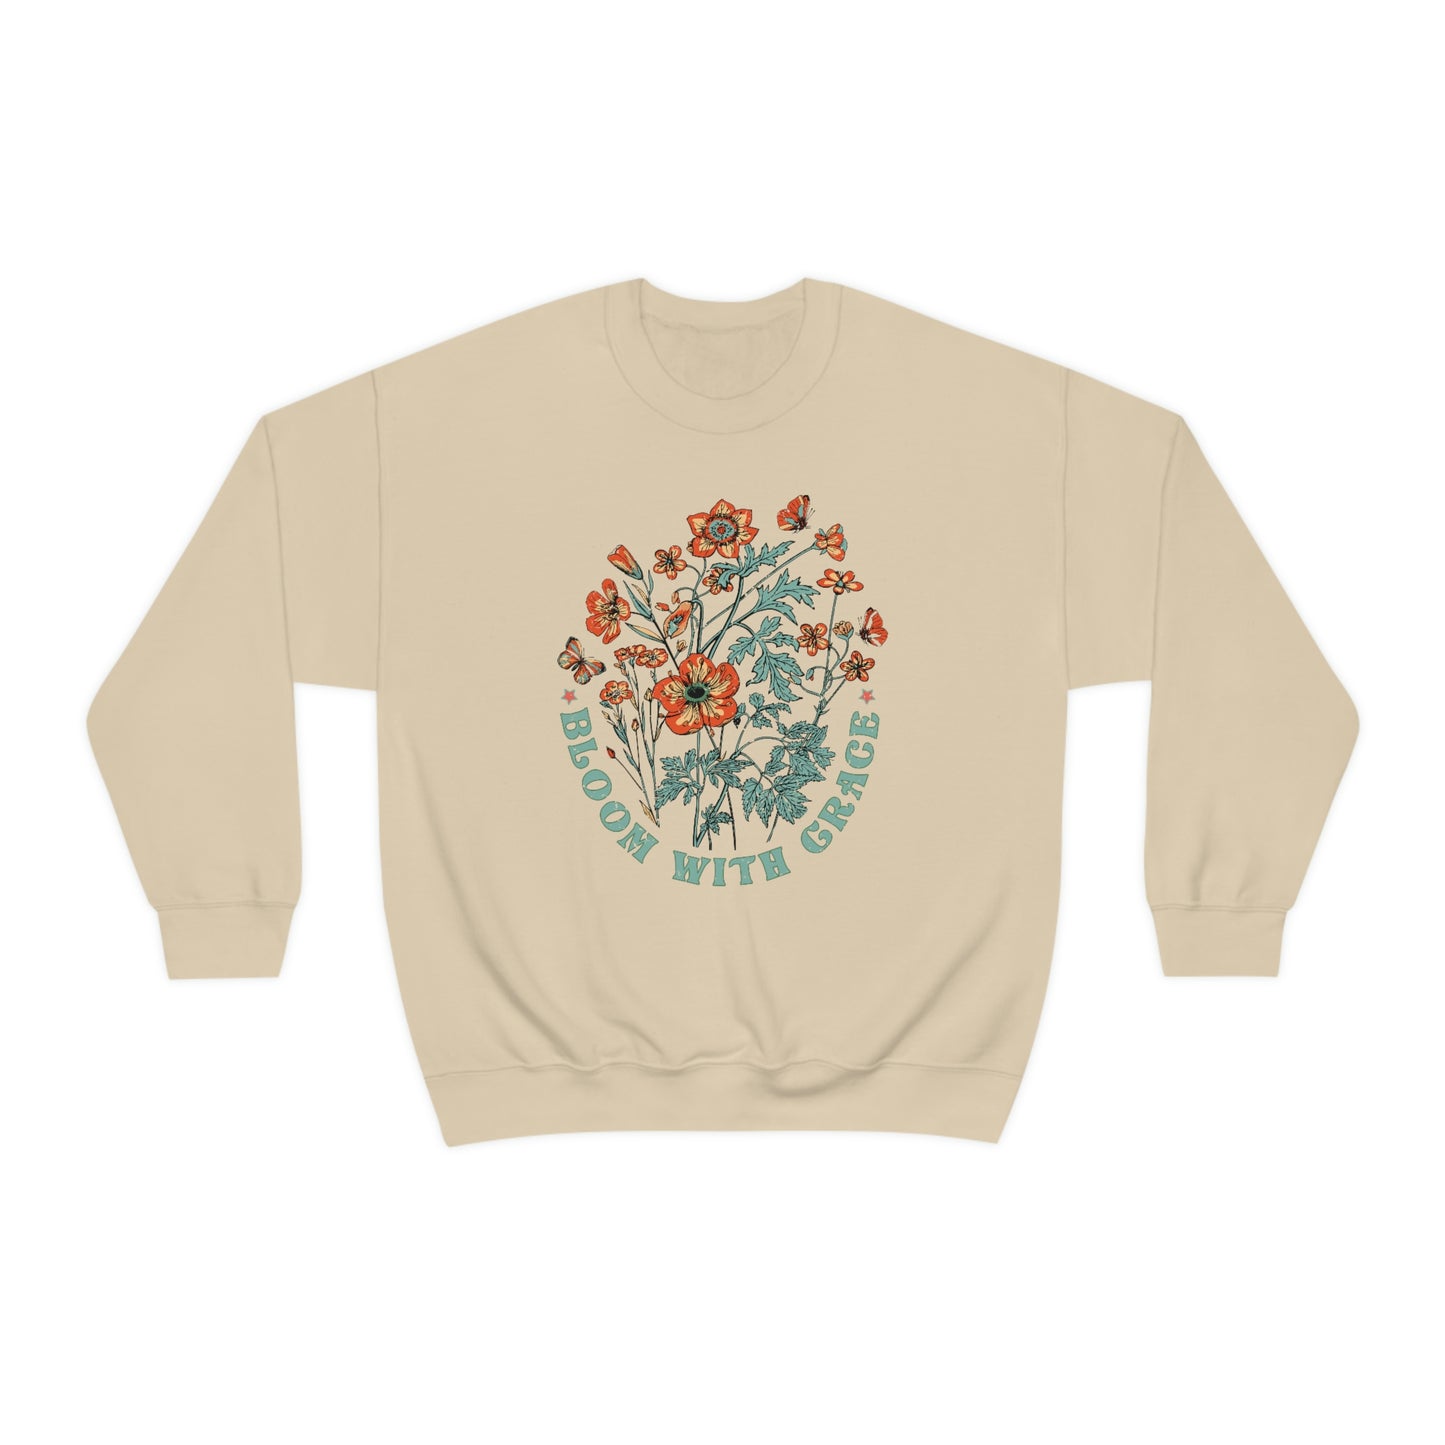 "Bloom With Grace" Unisex Crewneck Sweatshirt